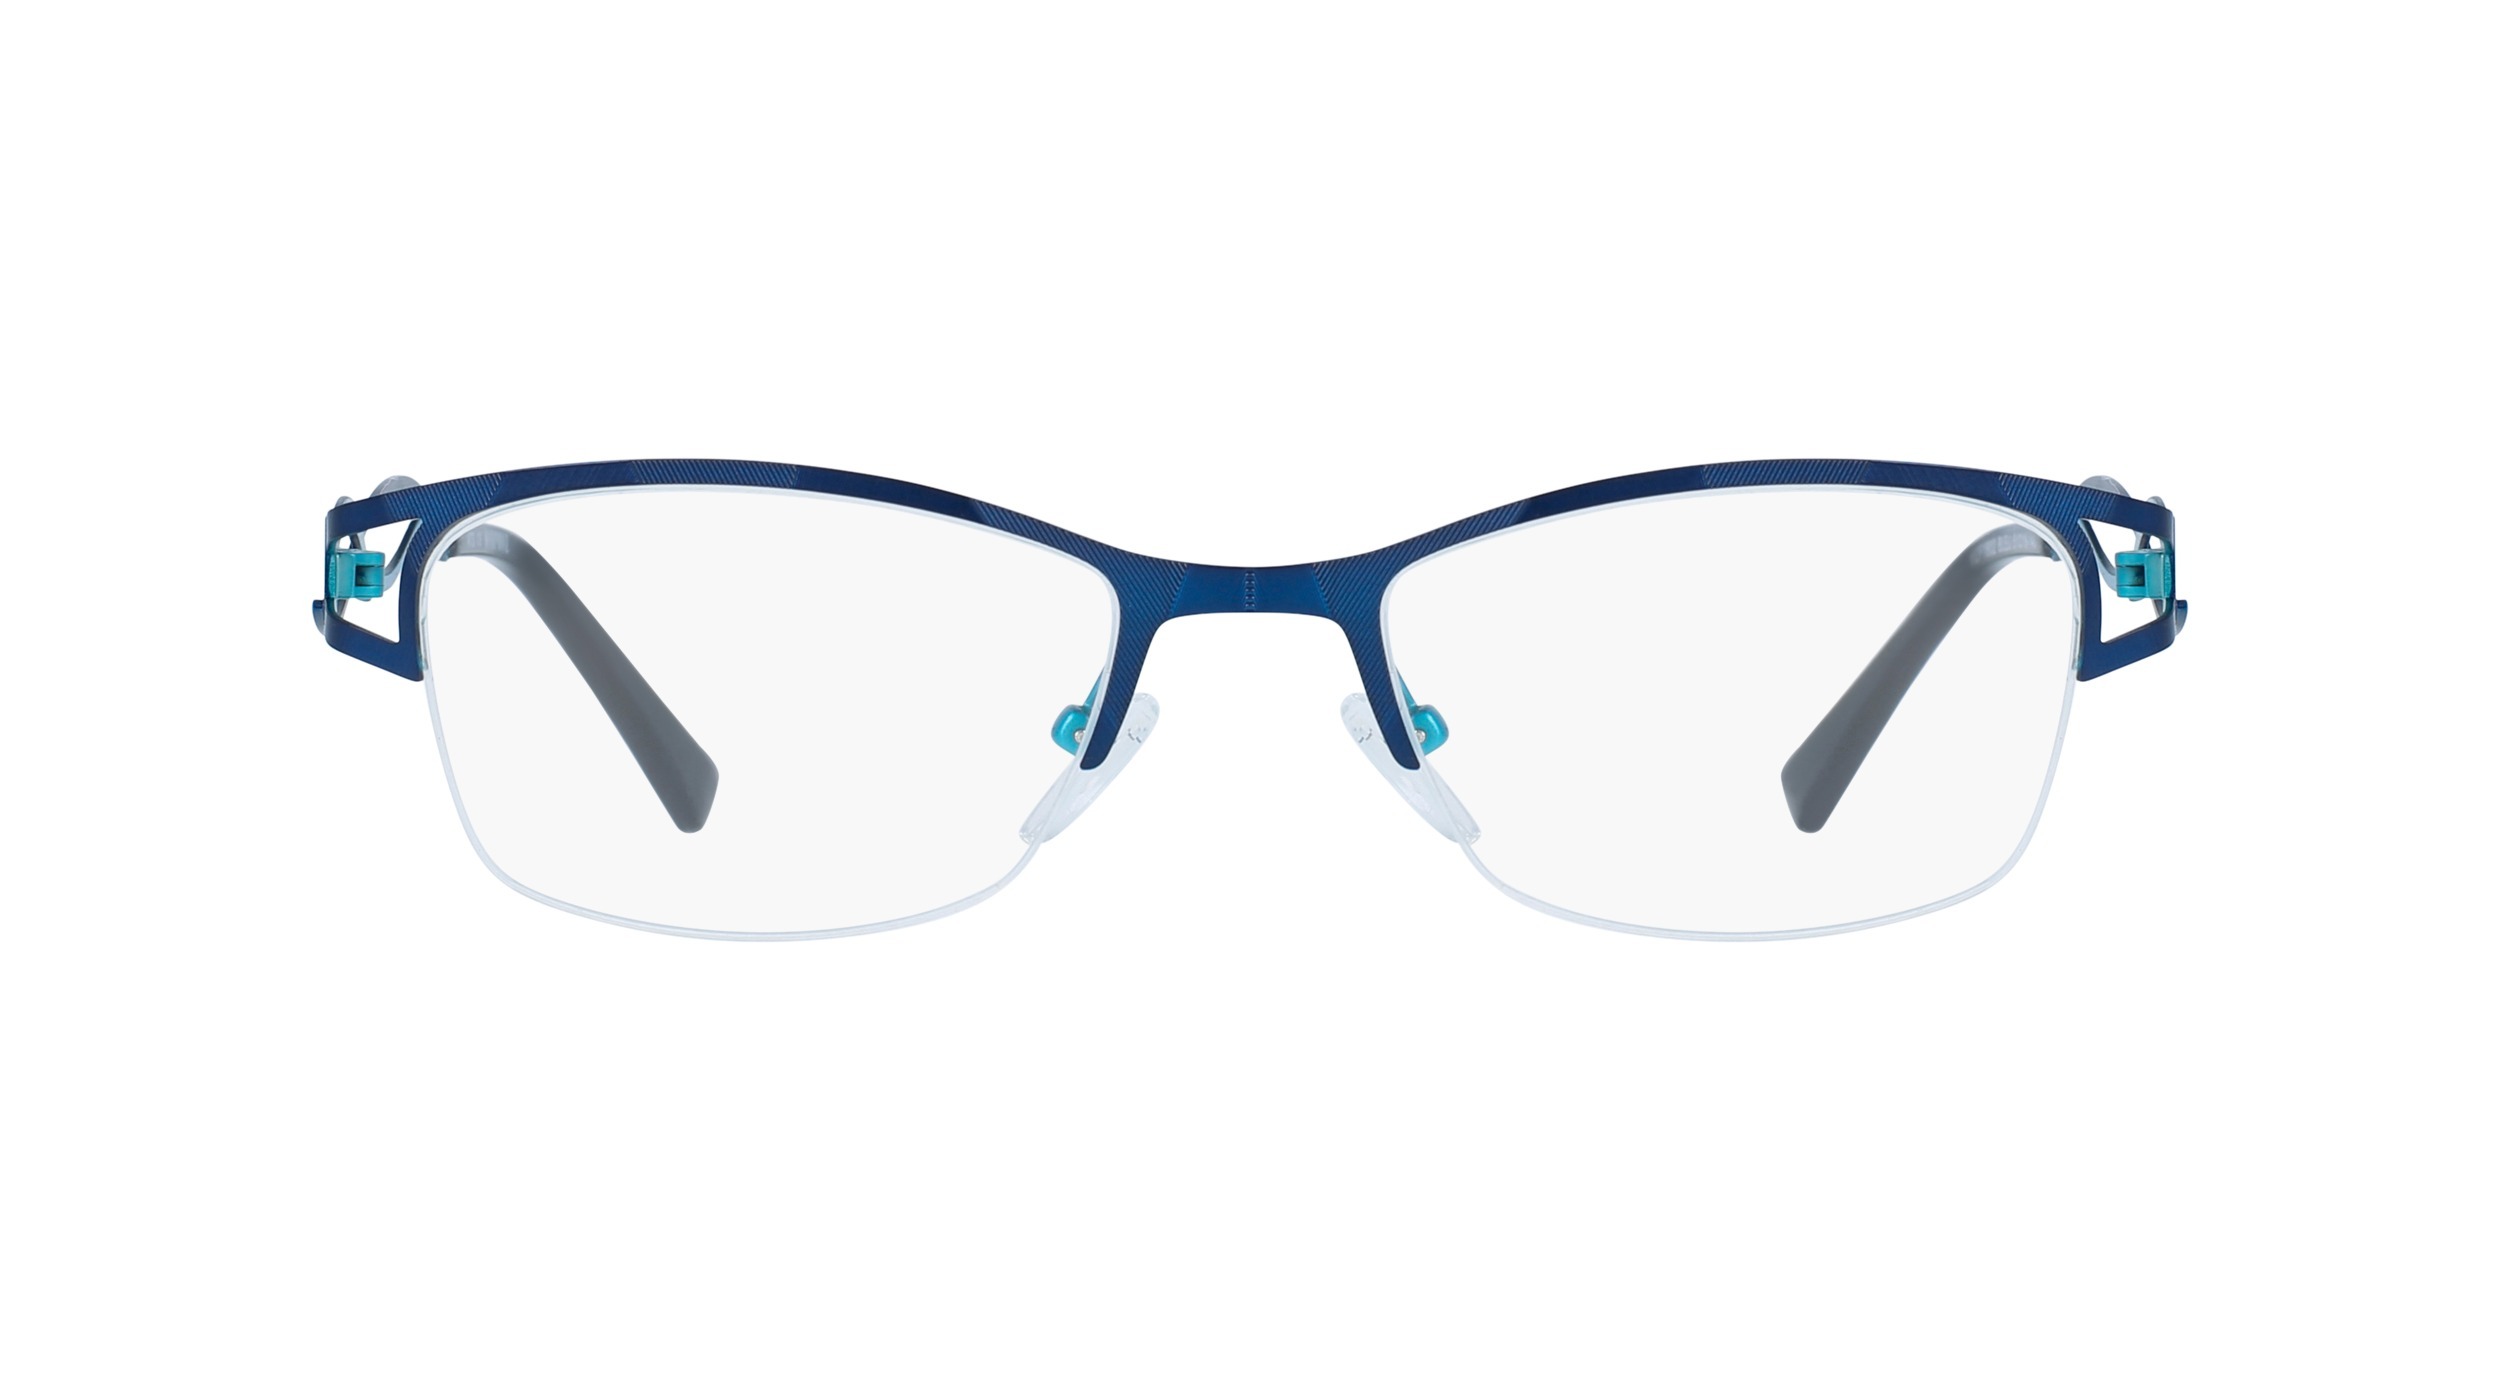 optic2000-lunettes-morphoz